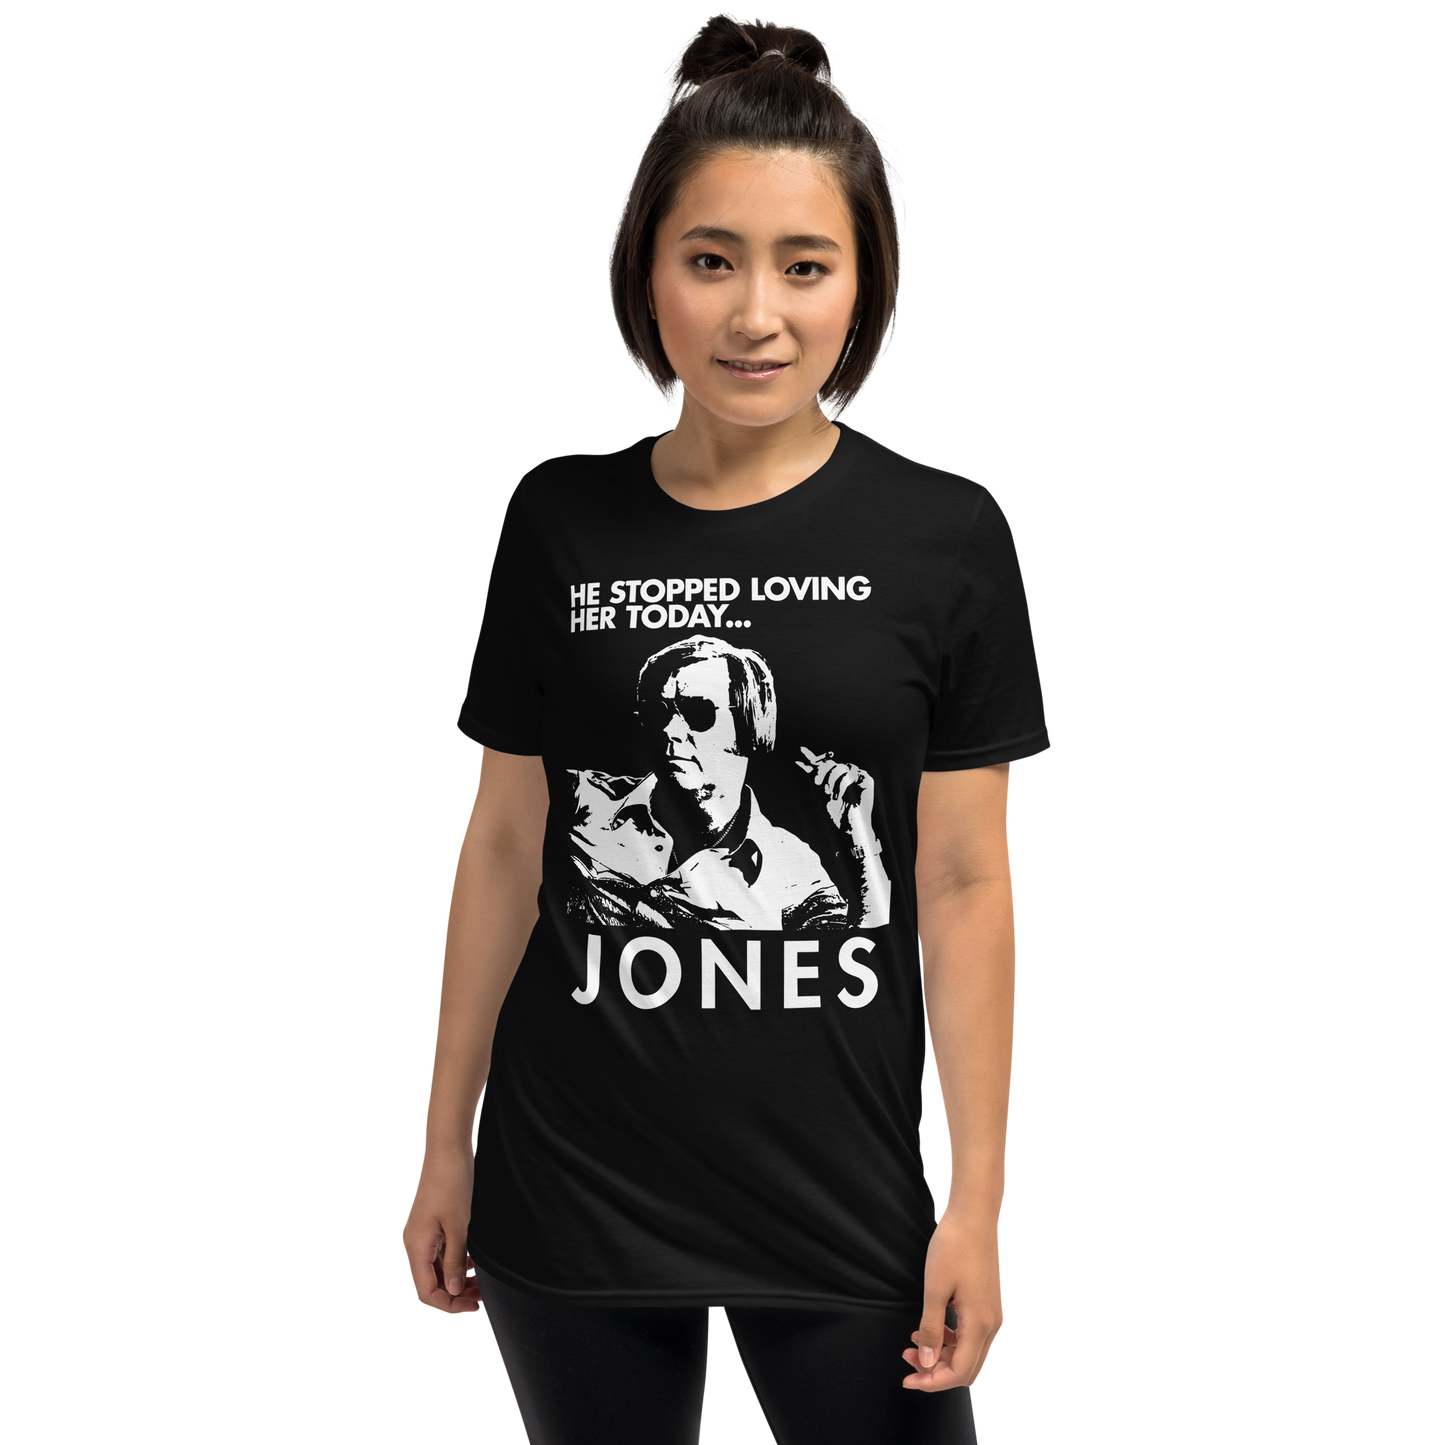 JONES T-Shirt